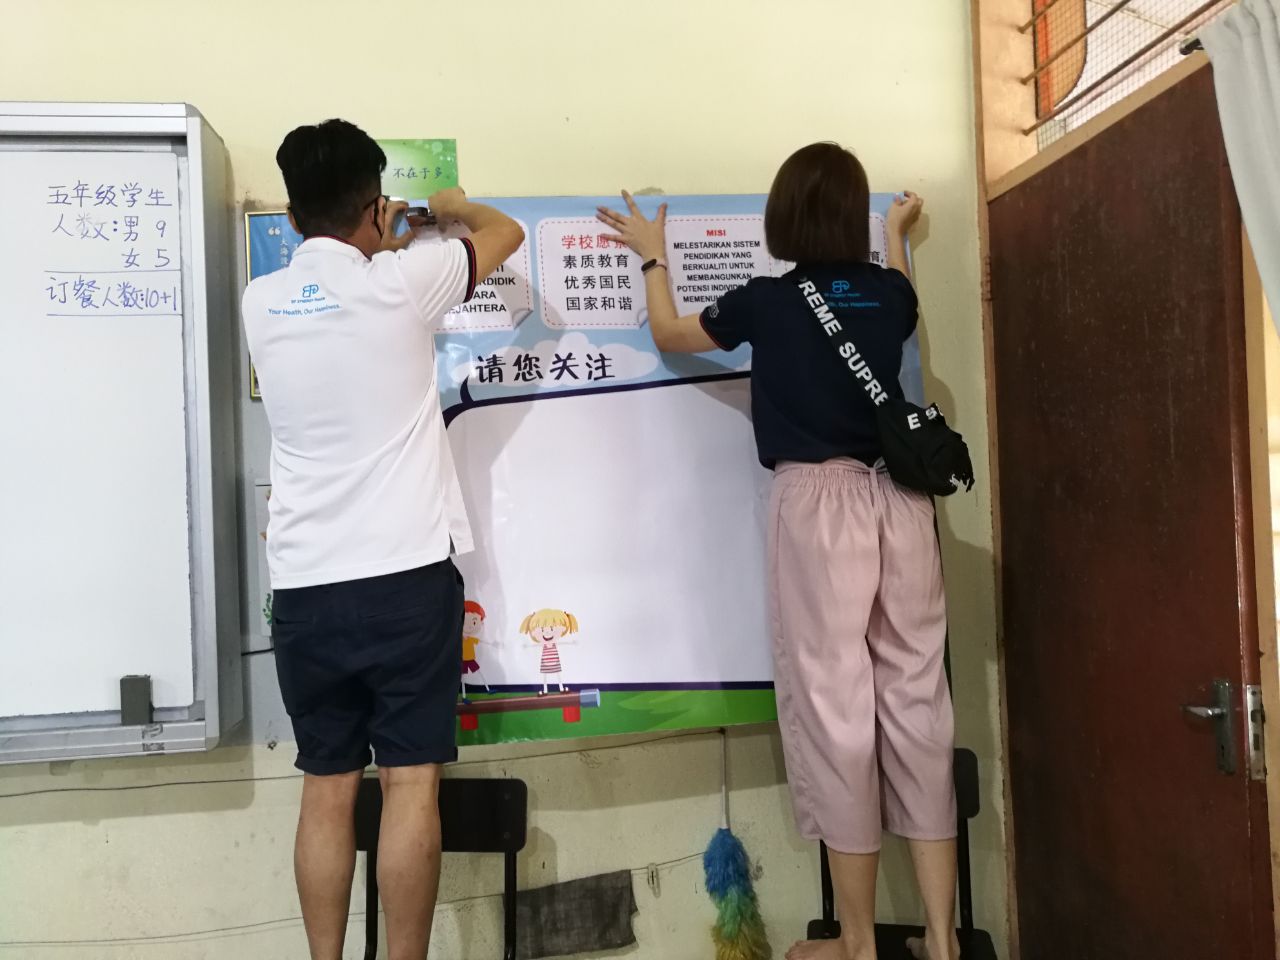 School Project @ SJK(C) Chin Hwa Kepala Batas